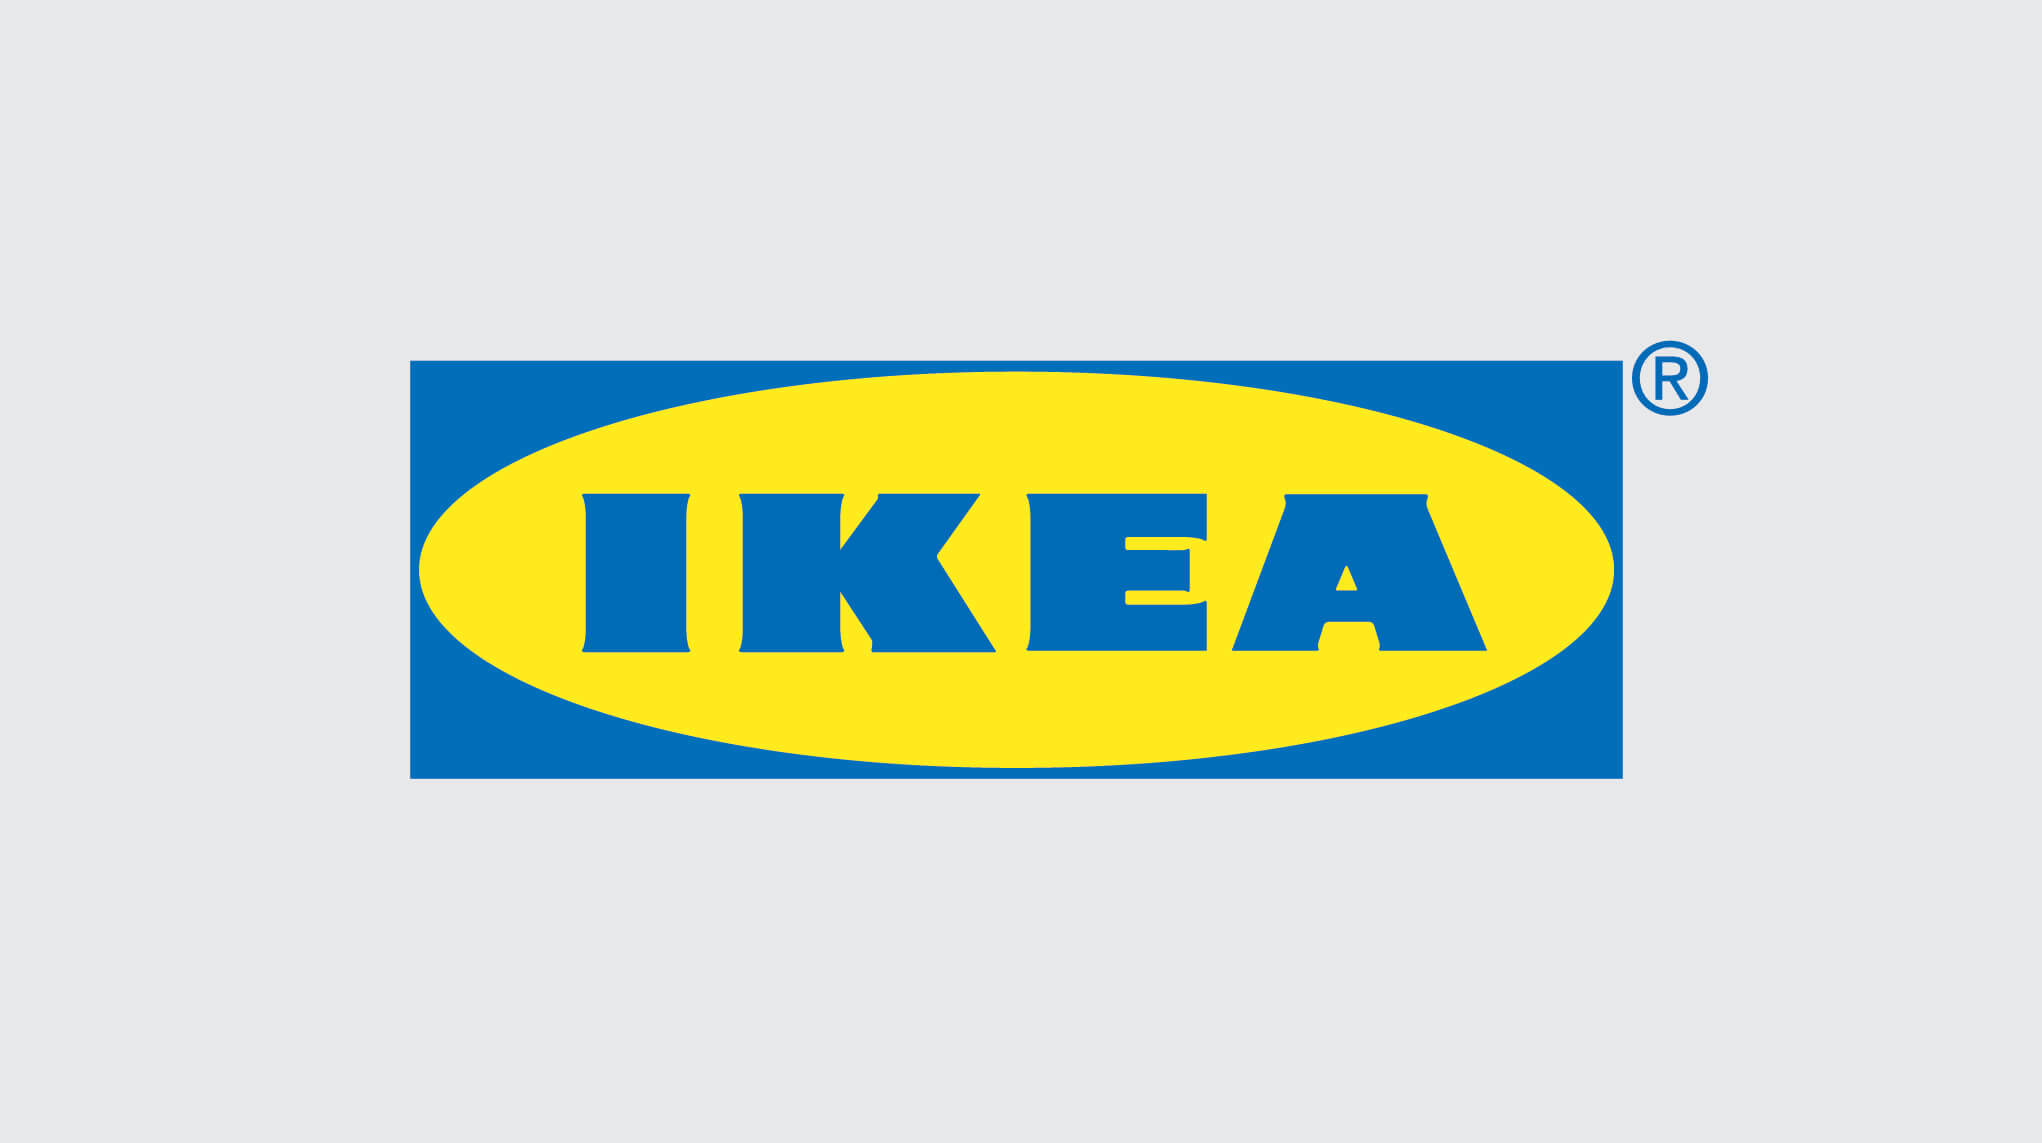 Ikea Logos